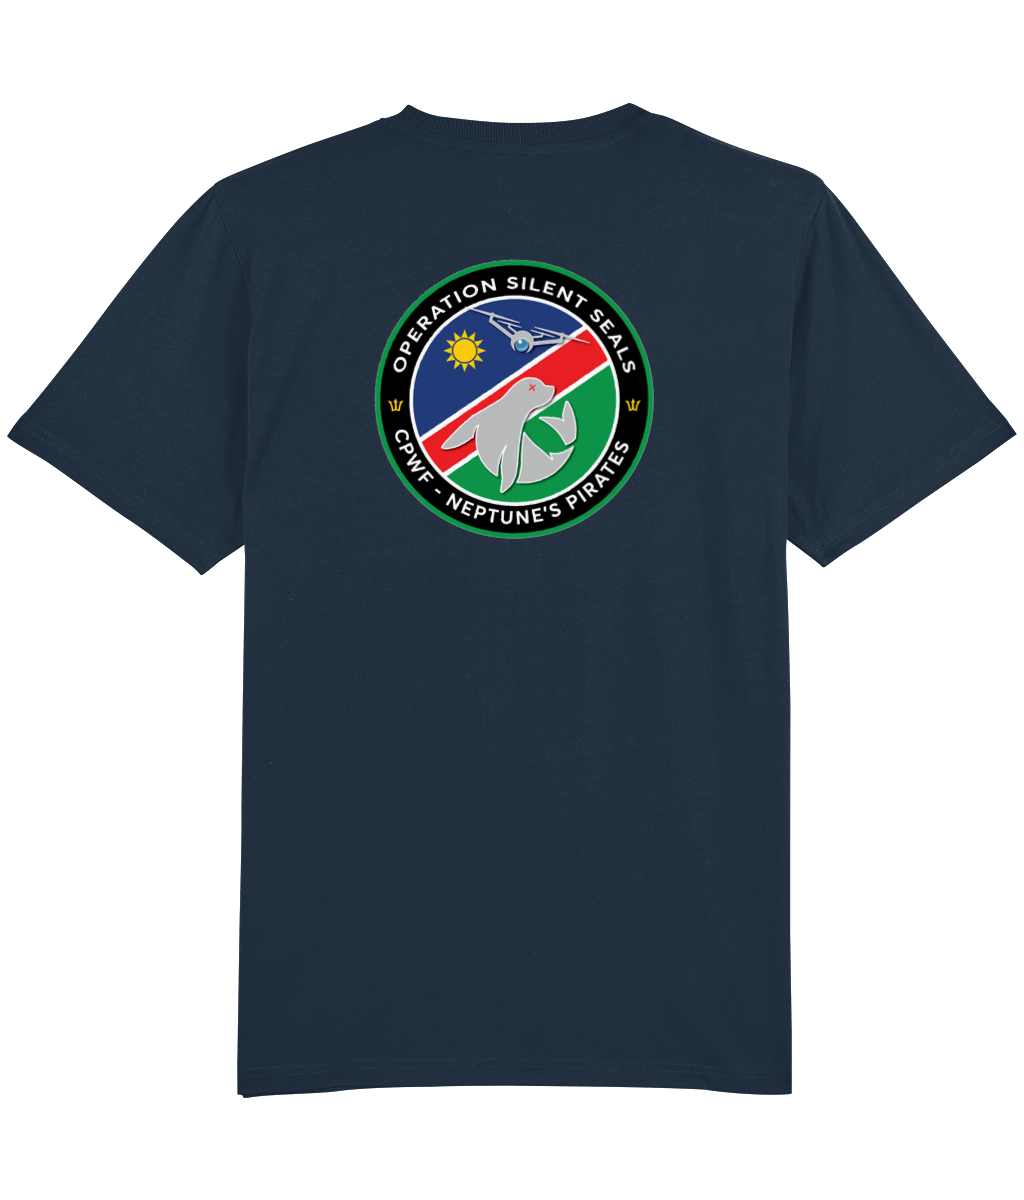 Operation Silent Seals Heavy Unisex T-Shirt - Captain Paul Watson Foundation (t/a Neptune's Pirates)